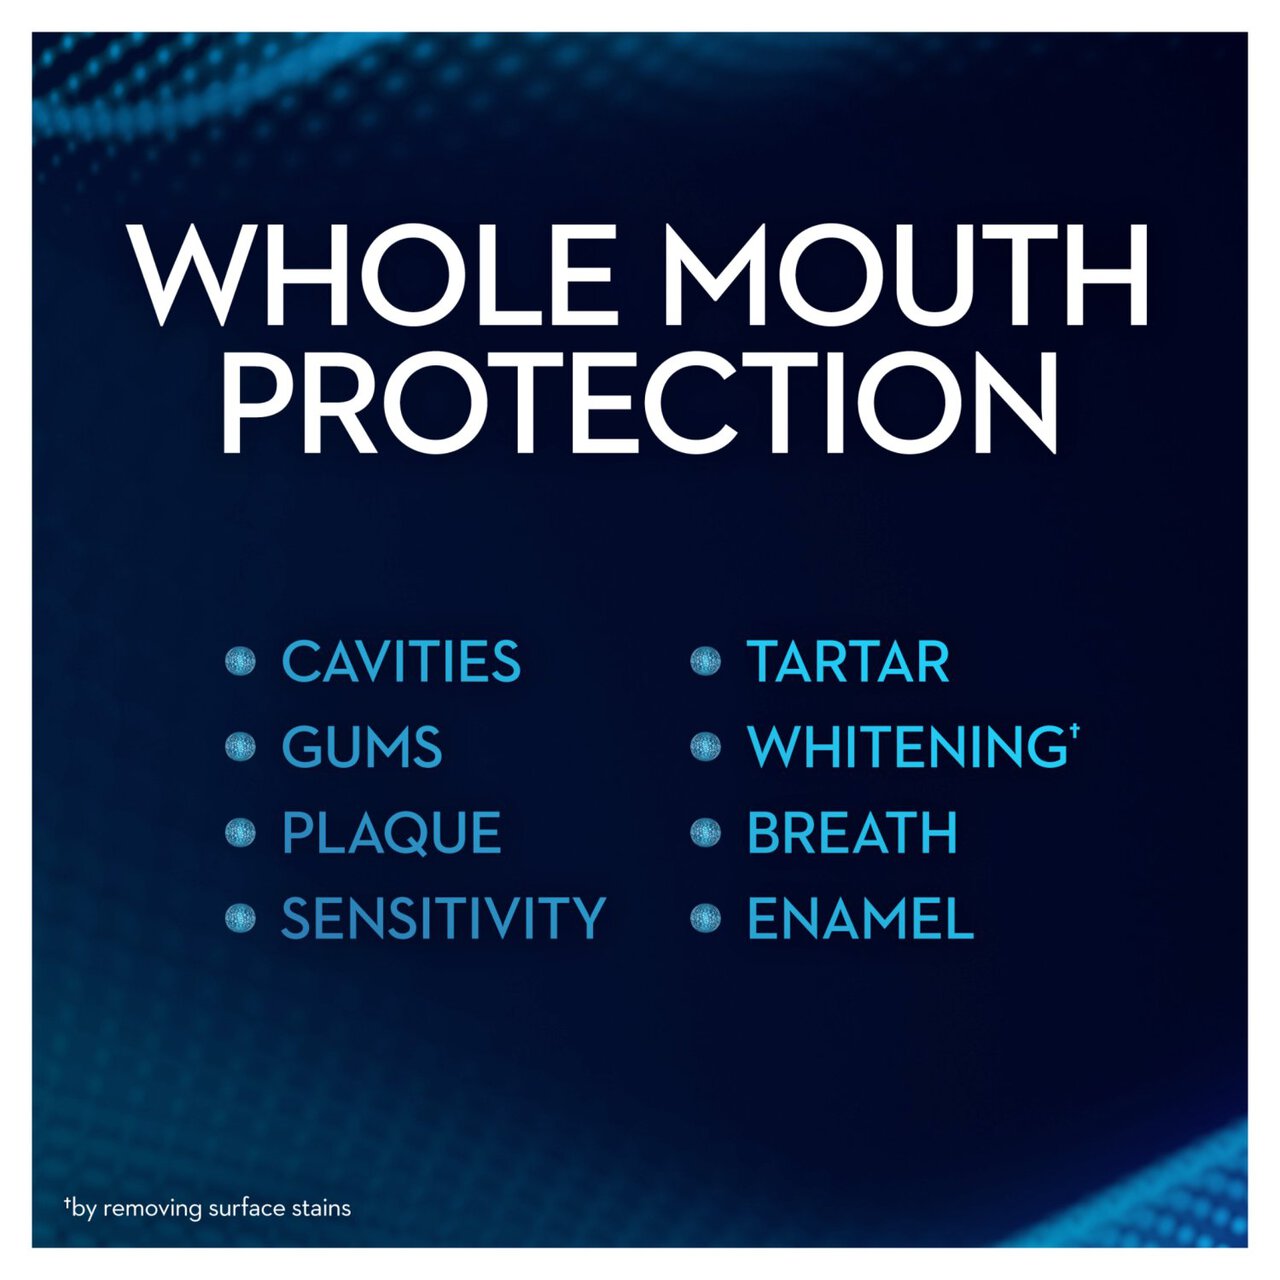 Oral-B Toothpaste Pro-Expert Whitening 75ml